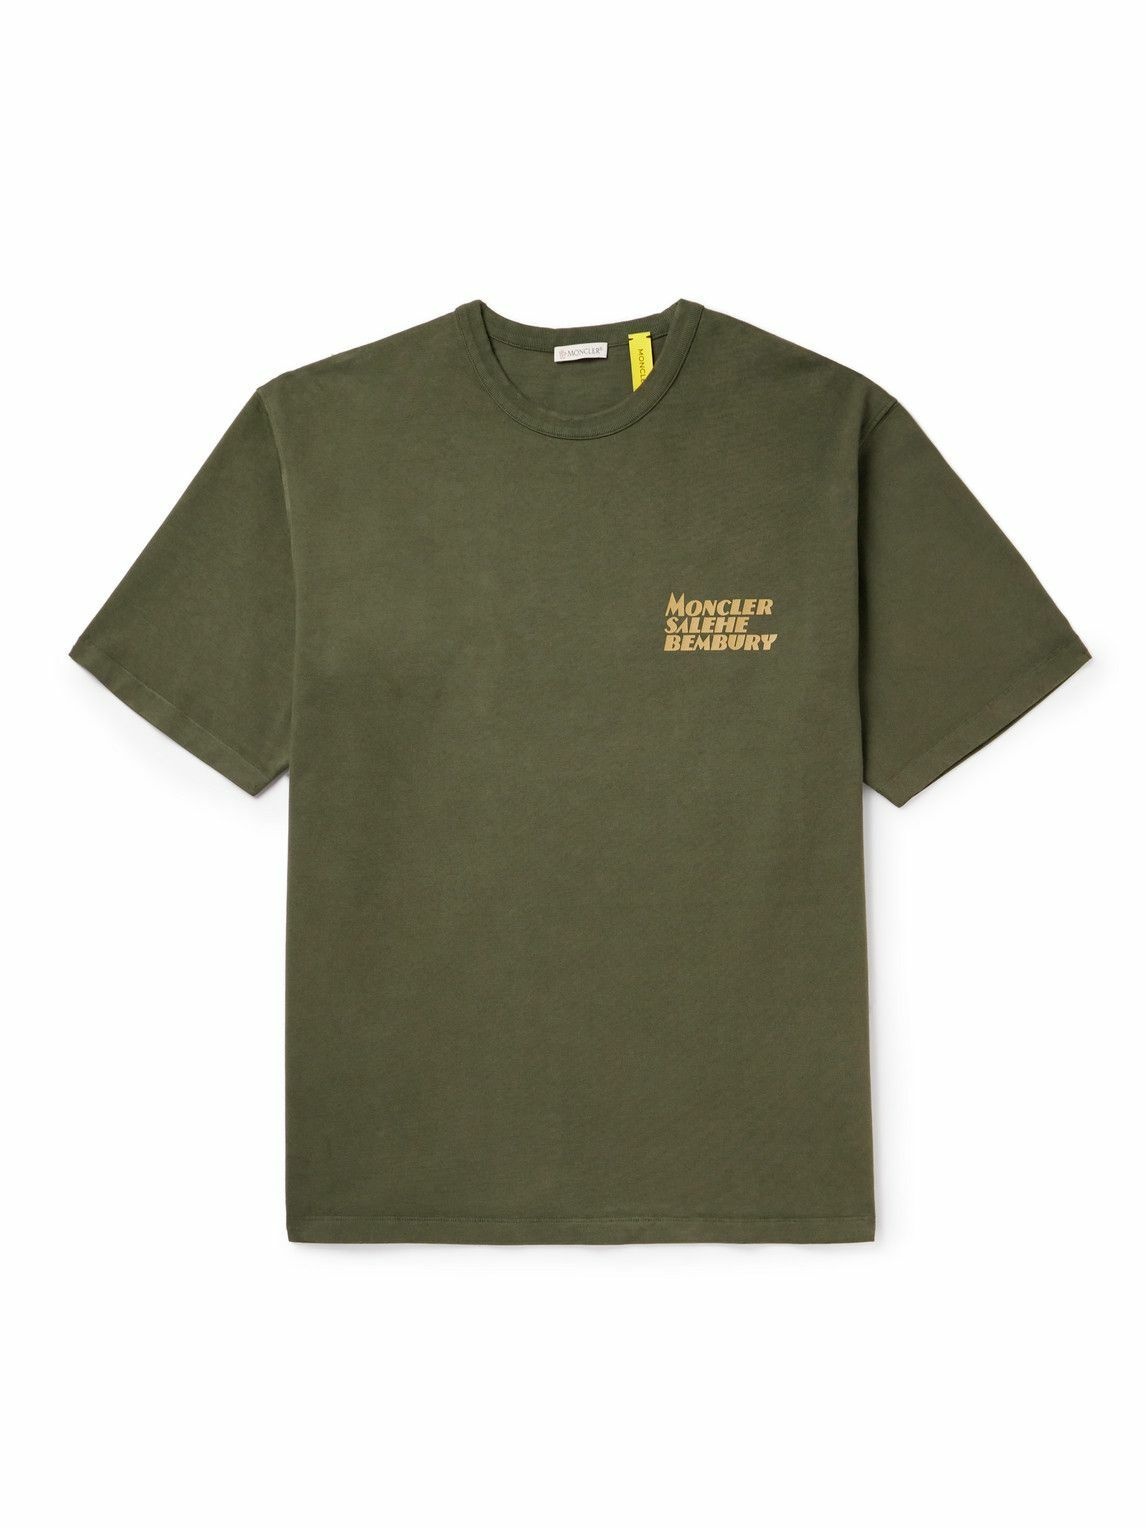 Moncler Genius - Salehe Bembury Logo-Print Cotton-Jersey T-Shirt ...